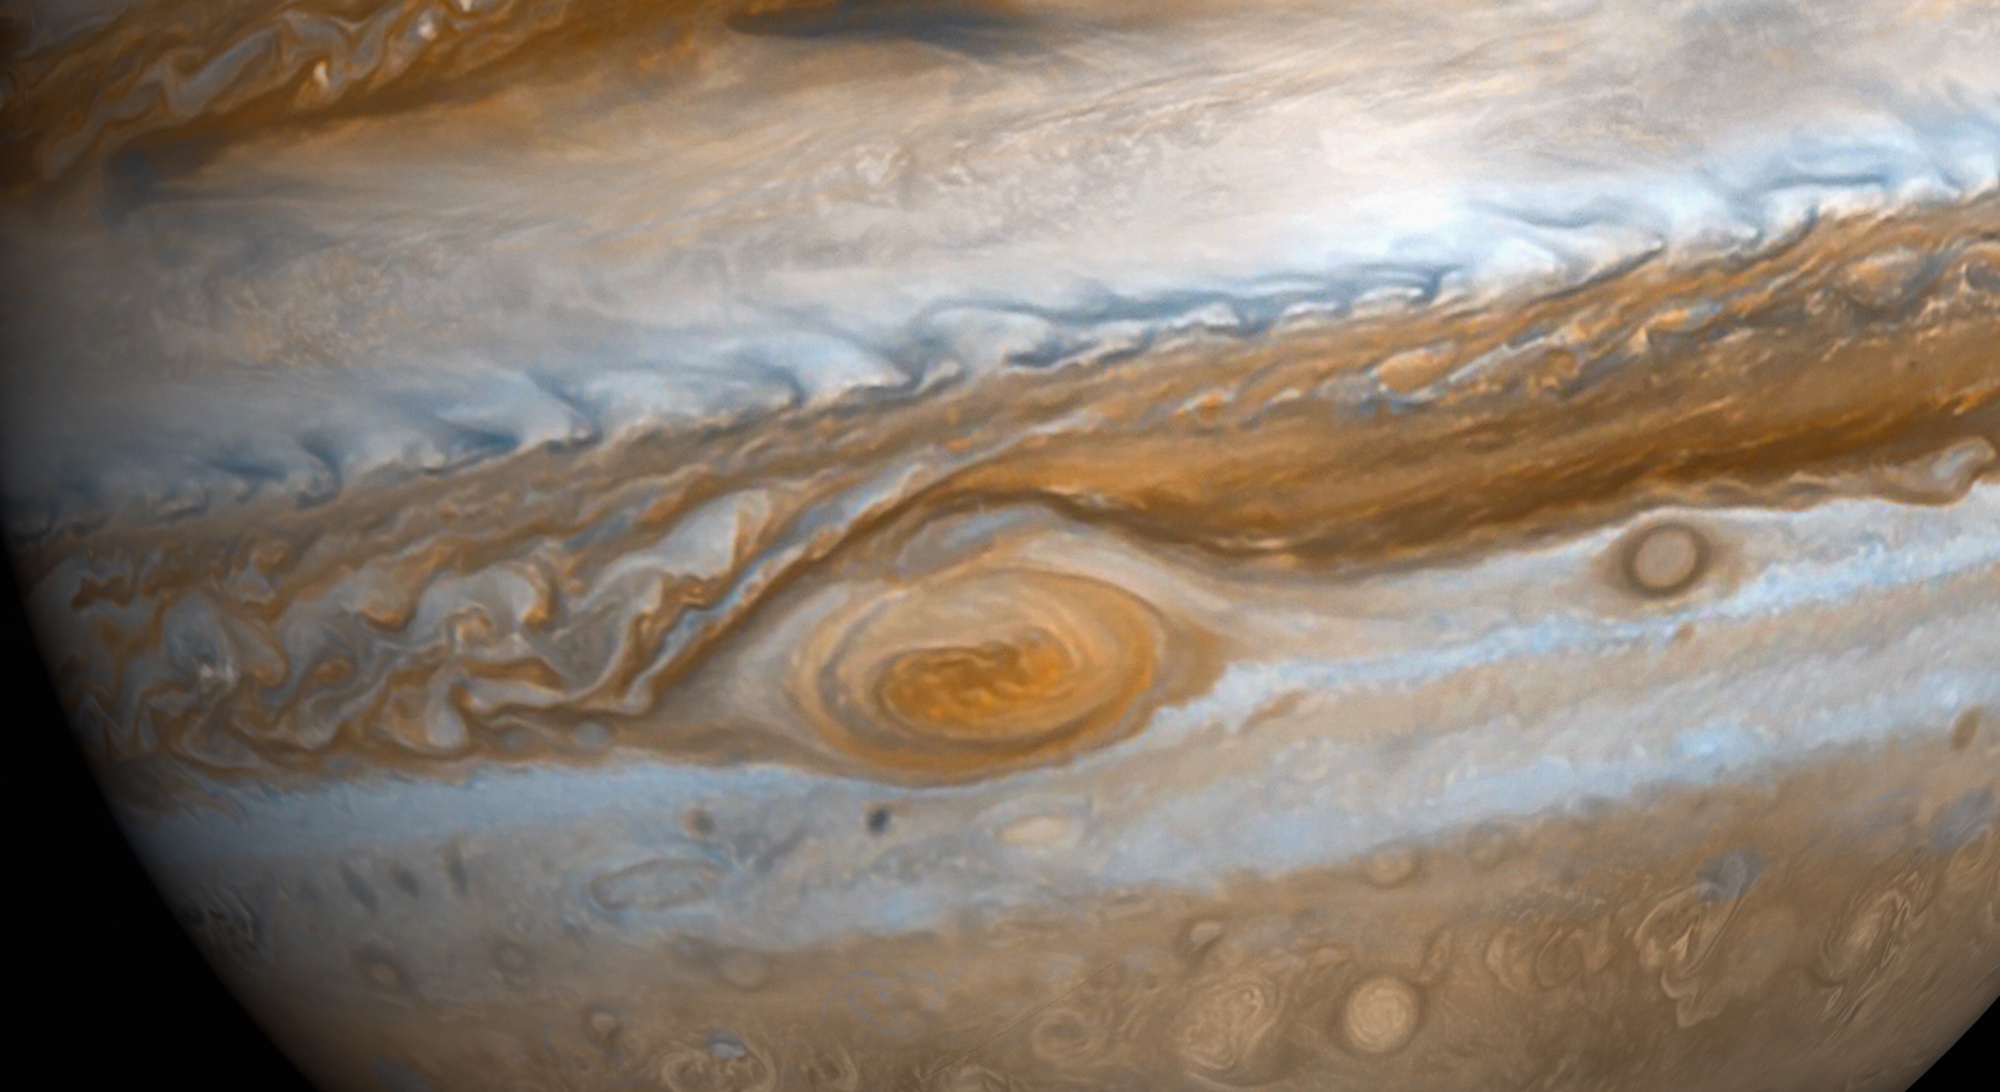 Illustration de Jupiter et de sa fameuse Grande Tache rouge. © rtype, Adobe Stock